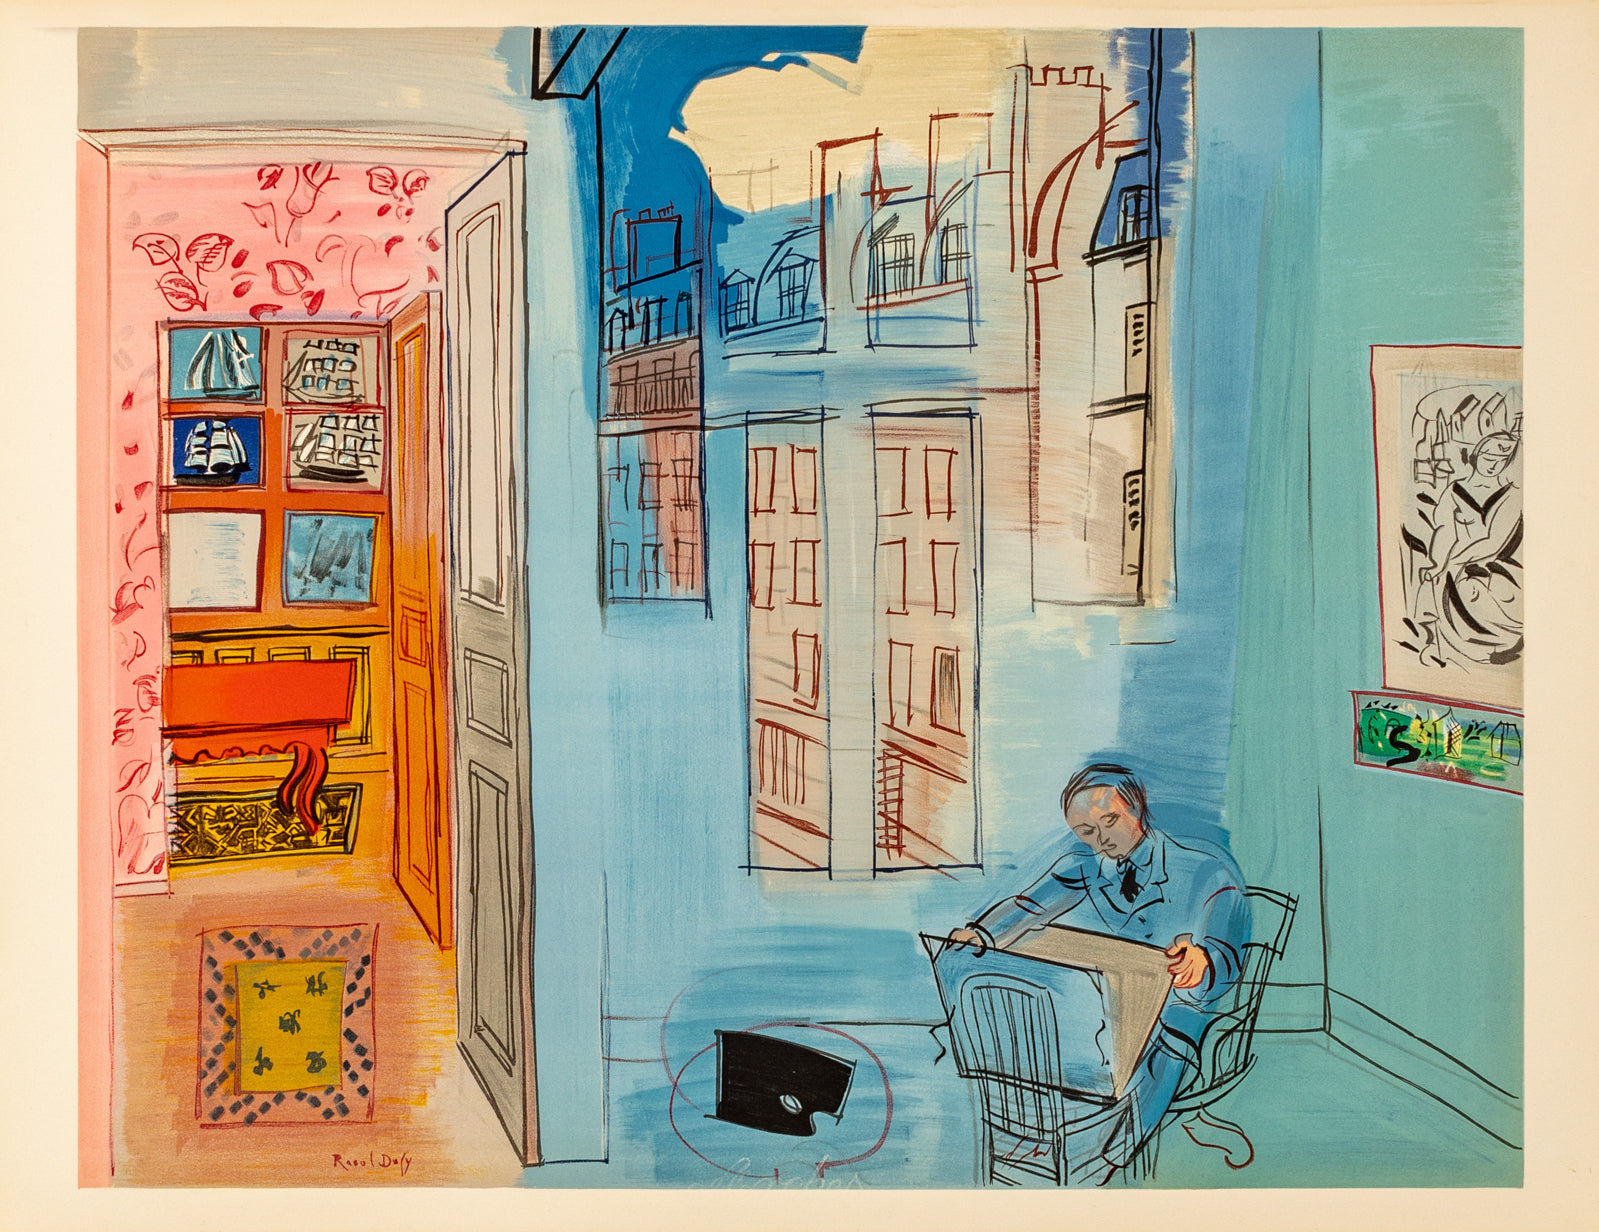 L’atelier (after) Raoul Dufy, 1969 - Mourlot Editions - Fine_Art - Poster - Lithograph - Wall Art - Vintage - Prints - Original